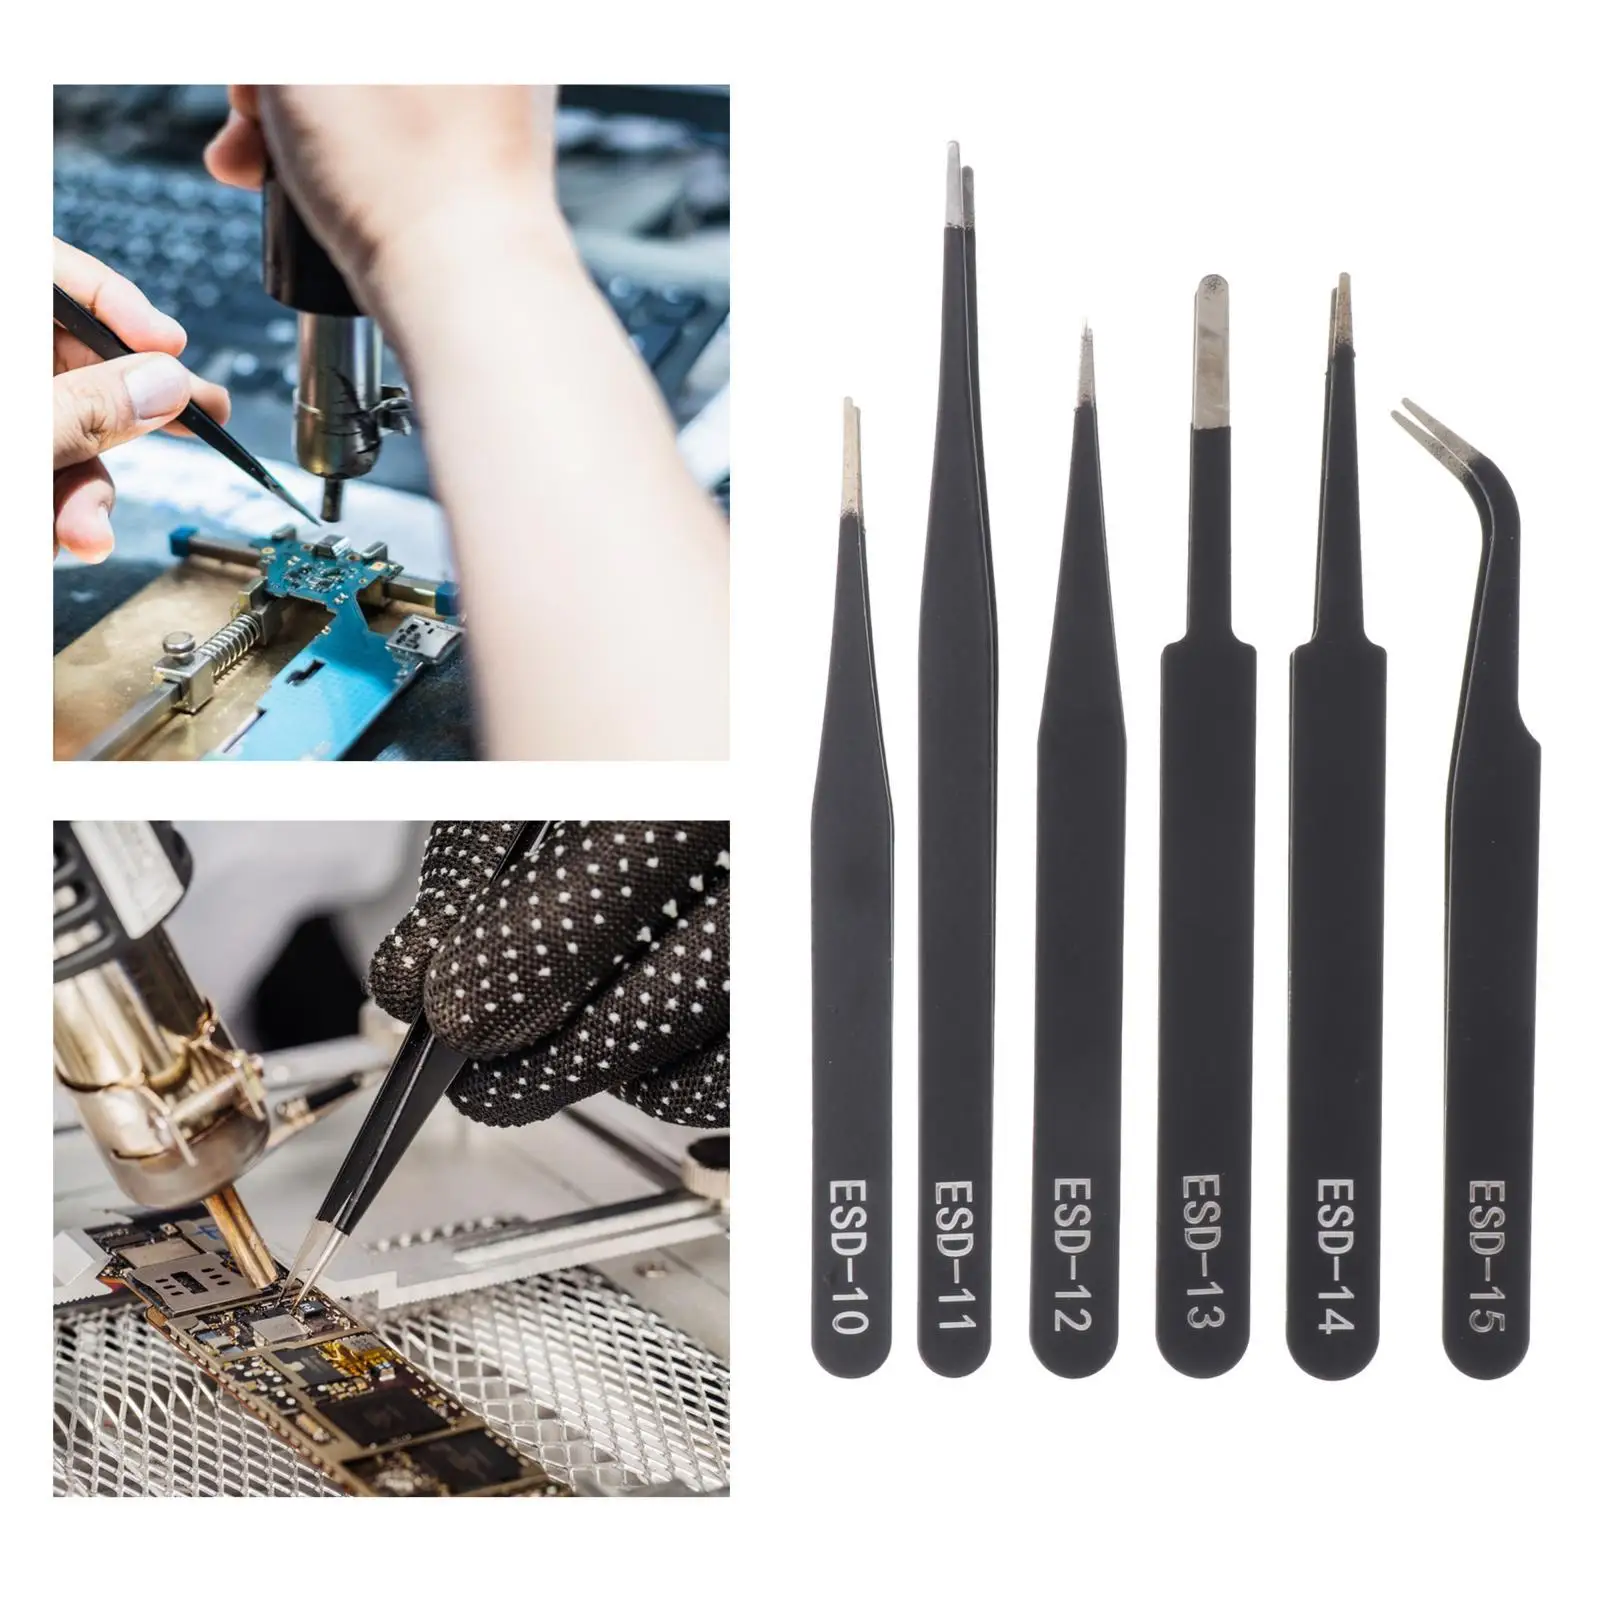 6Pcs Stainless Steel Tweezers Professional Precision Tweezers Set Craft Tweezers Set for Crafting Electronics Repair Soldering